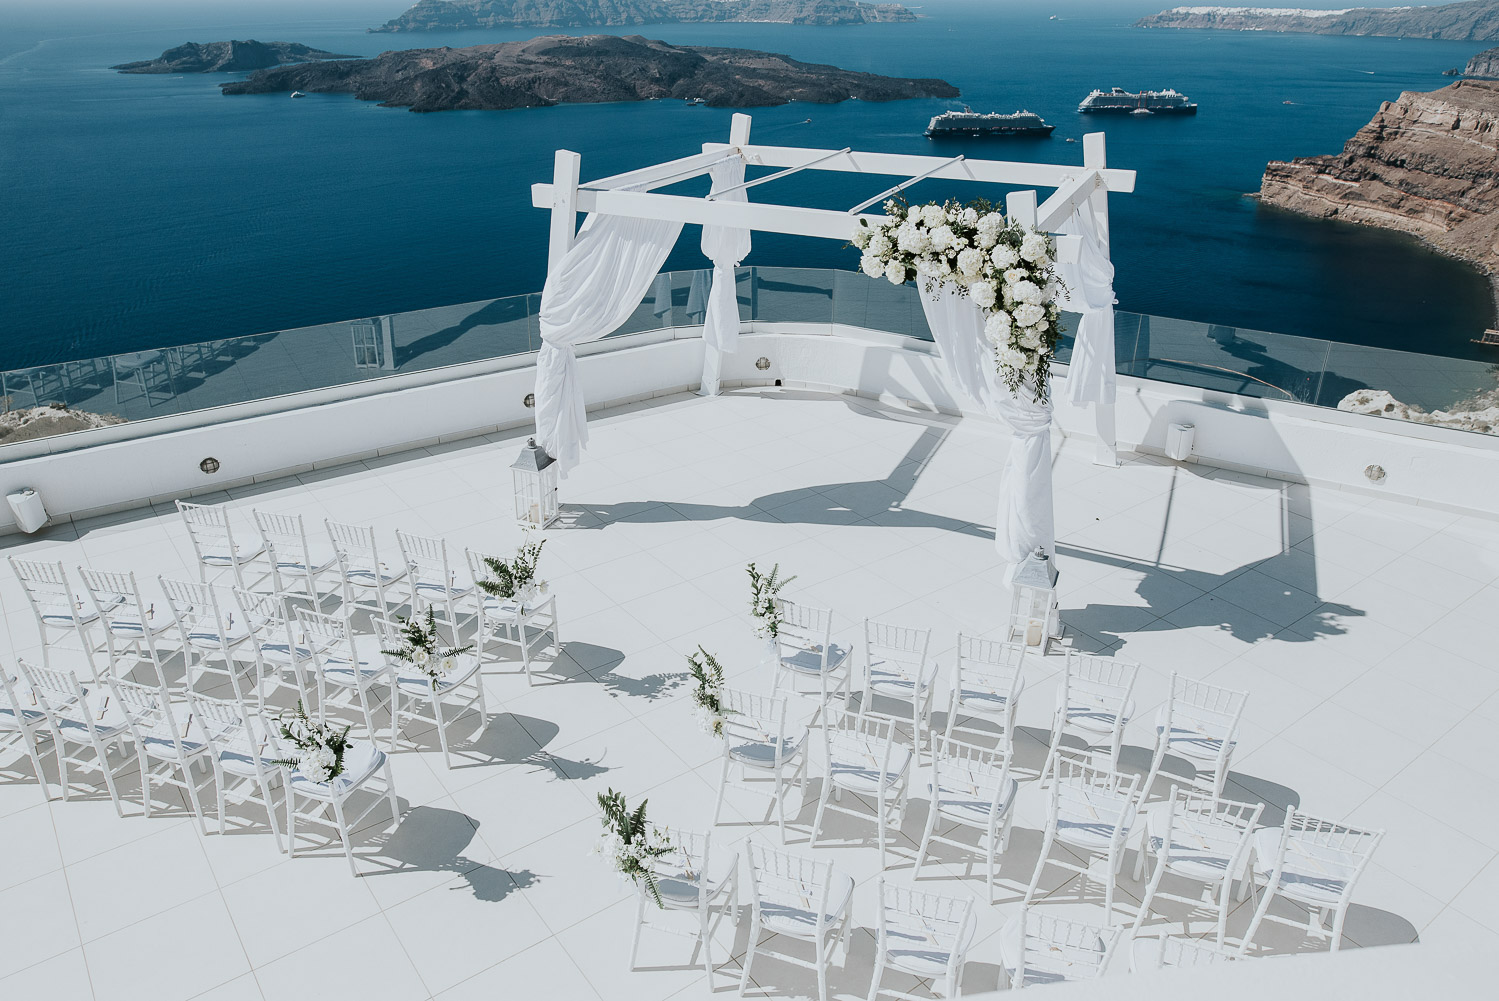 Wedding photographer Santorini: views of the ceremony terrace by Ben and Vesna.